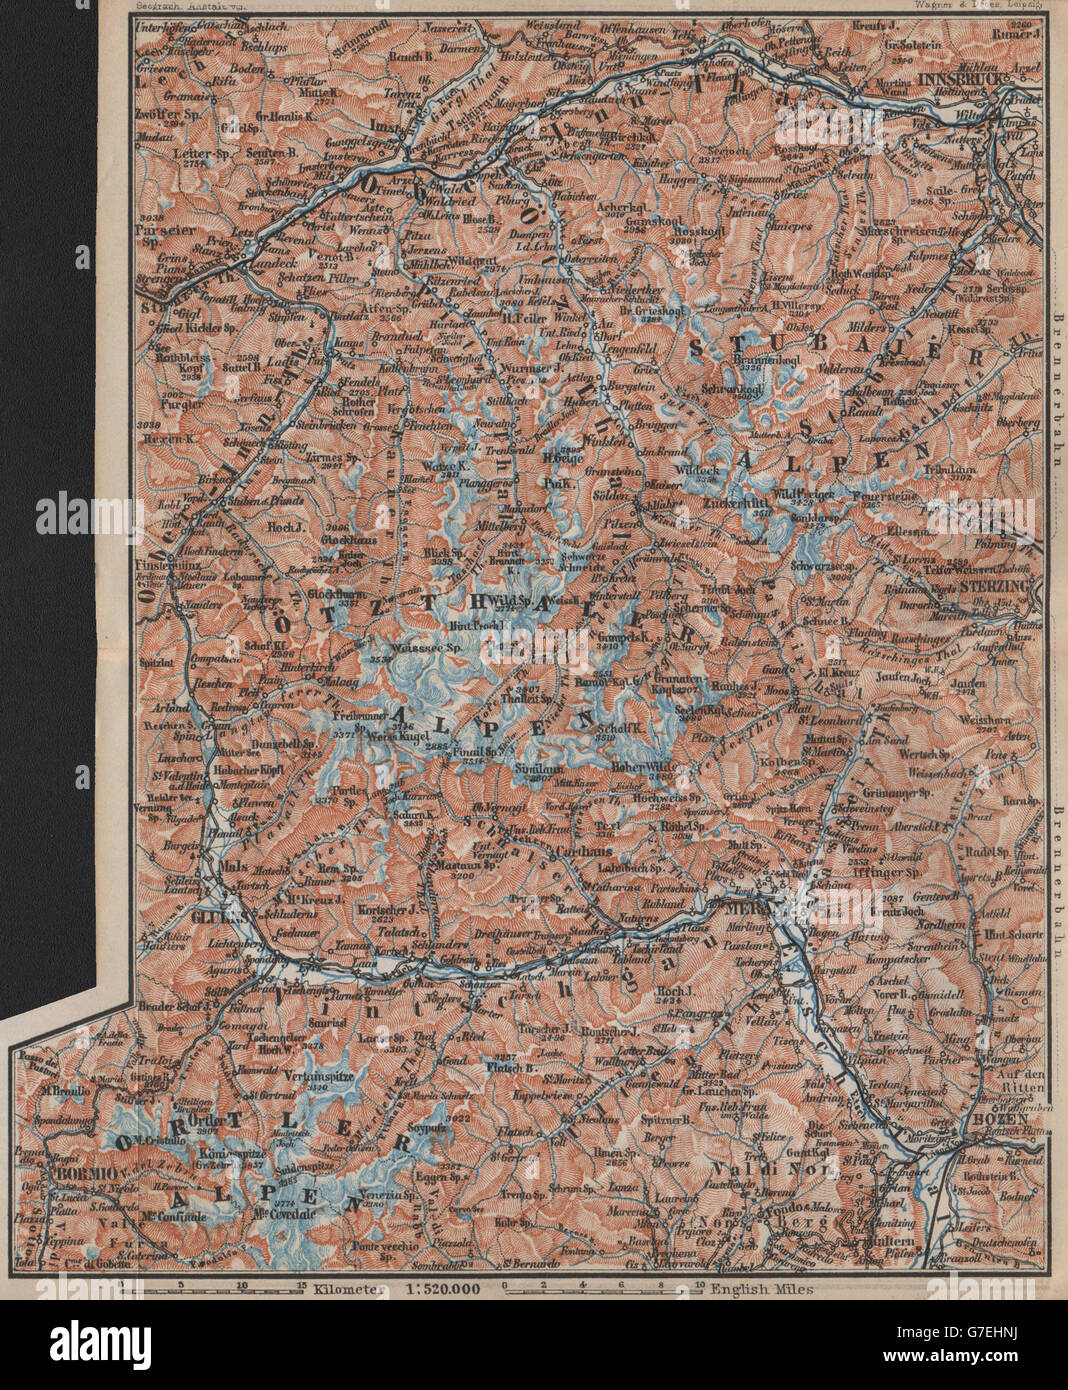 TYROL/ UPPER INNTHAL ÖTZTHALER ORTLER STUBAIER ALPEN topo-map. Austria, 1905 Stock Photo